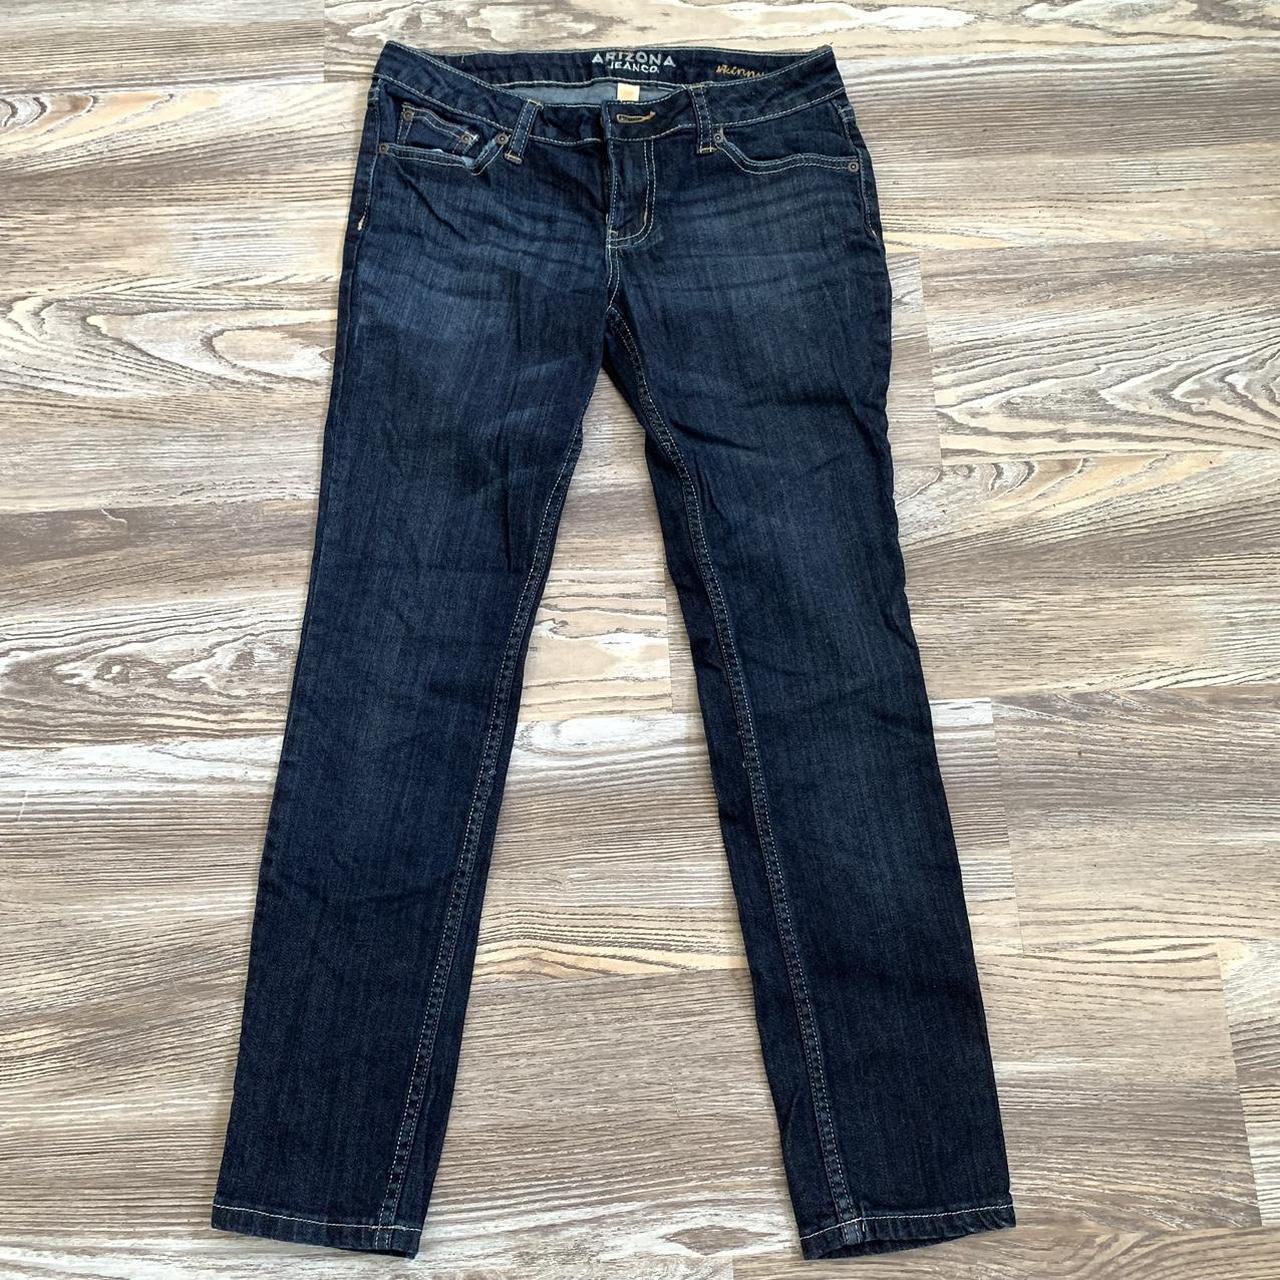 Depop size jeans! - Arizona blue skinny 7 denim, Dark short....